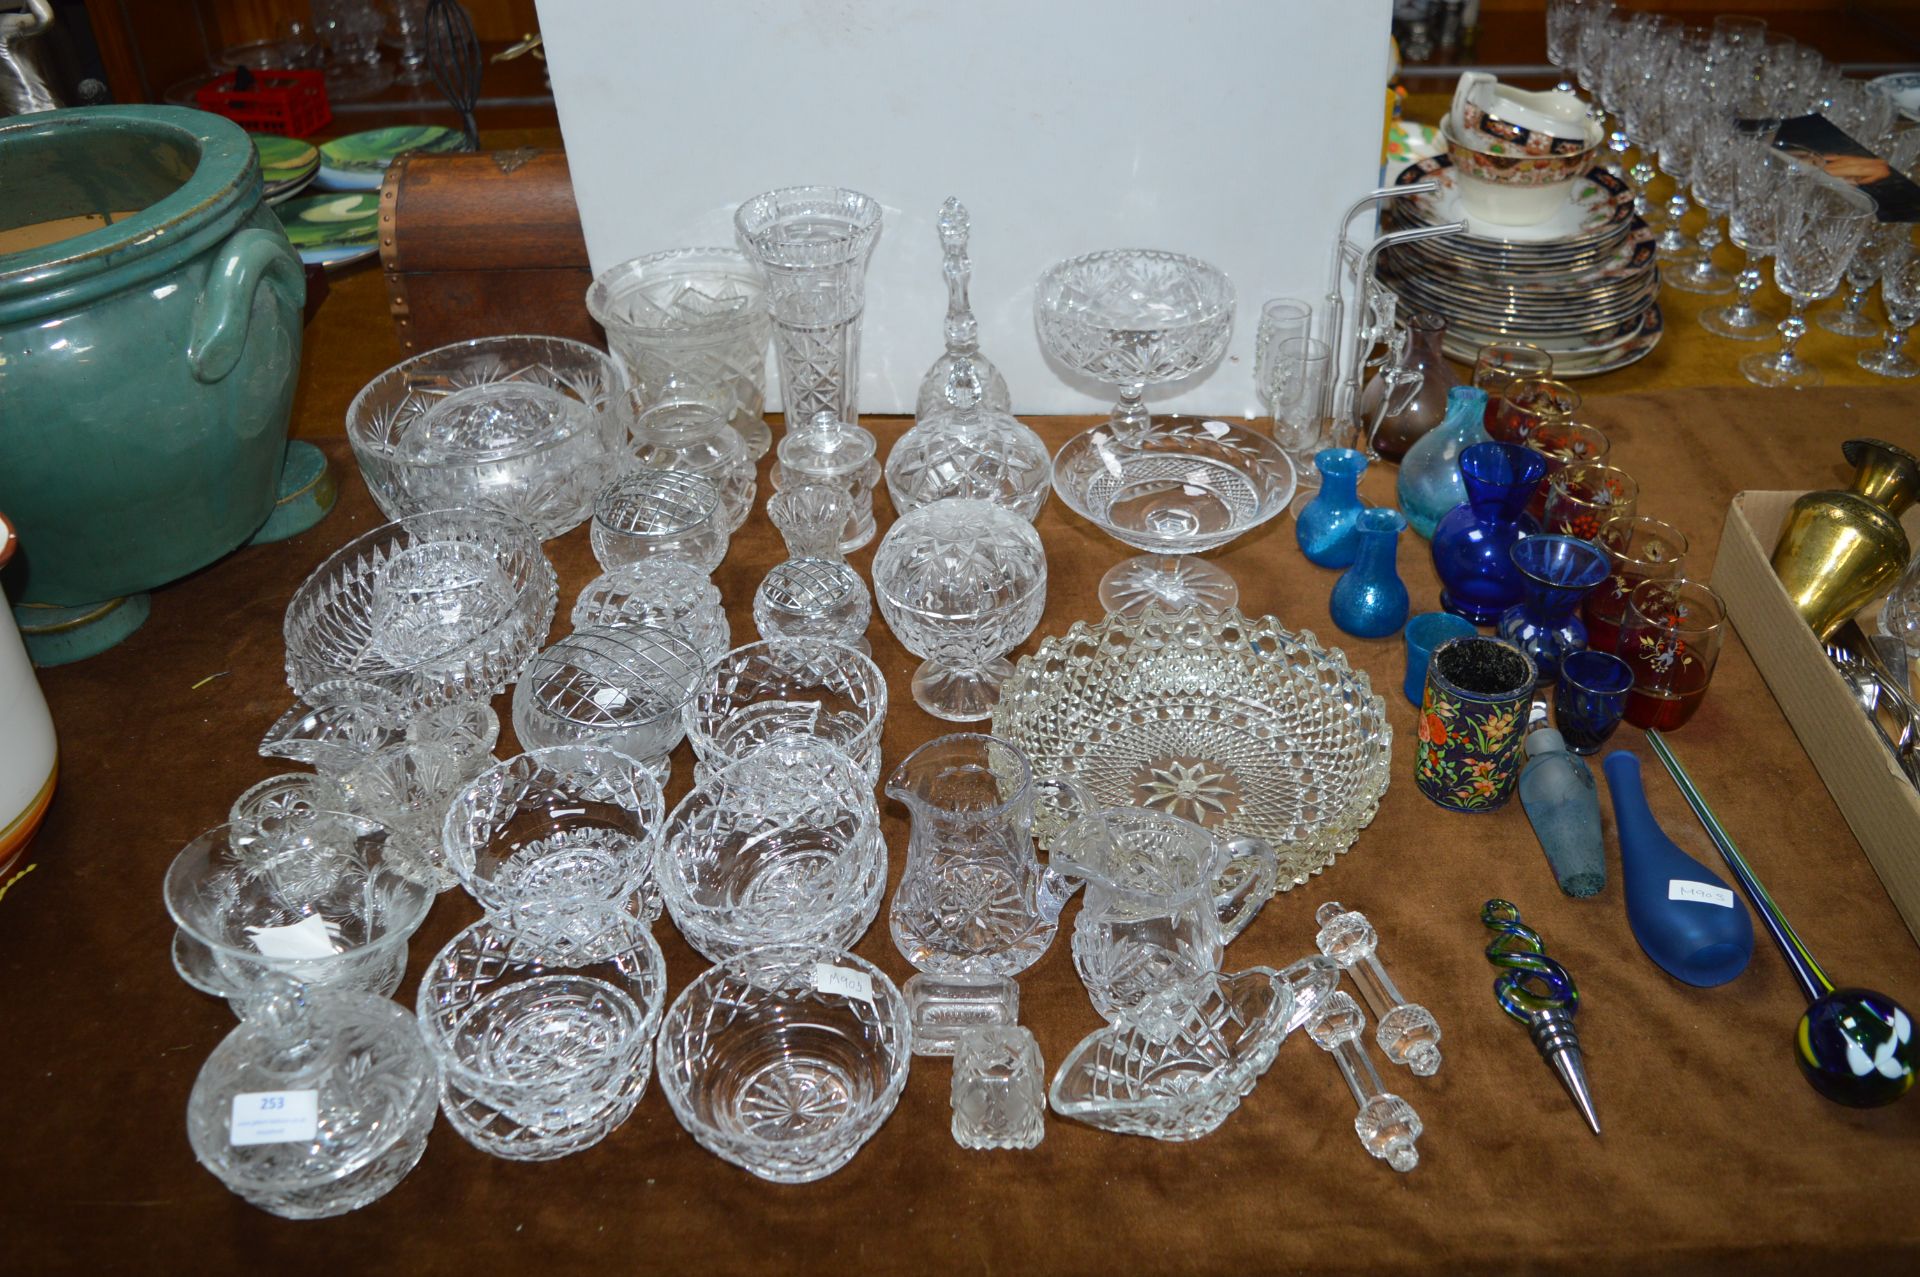 Quantity of Glassware, Cut Glass Dishes, etc.